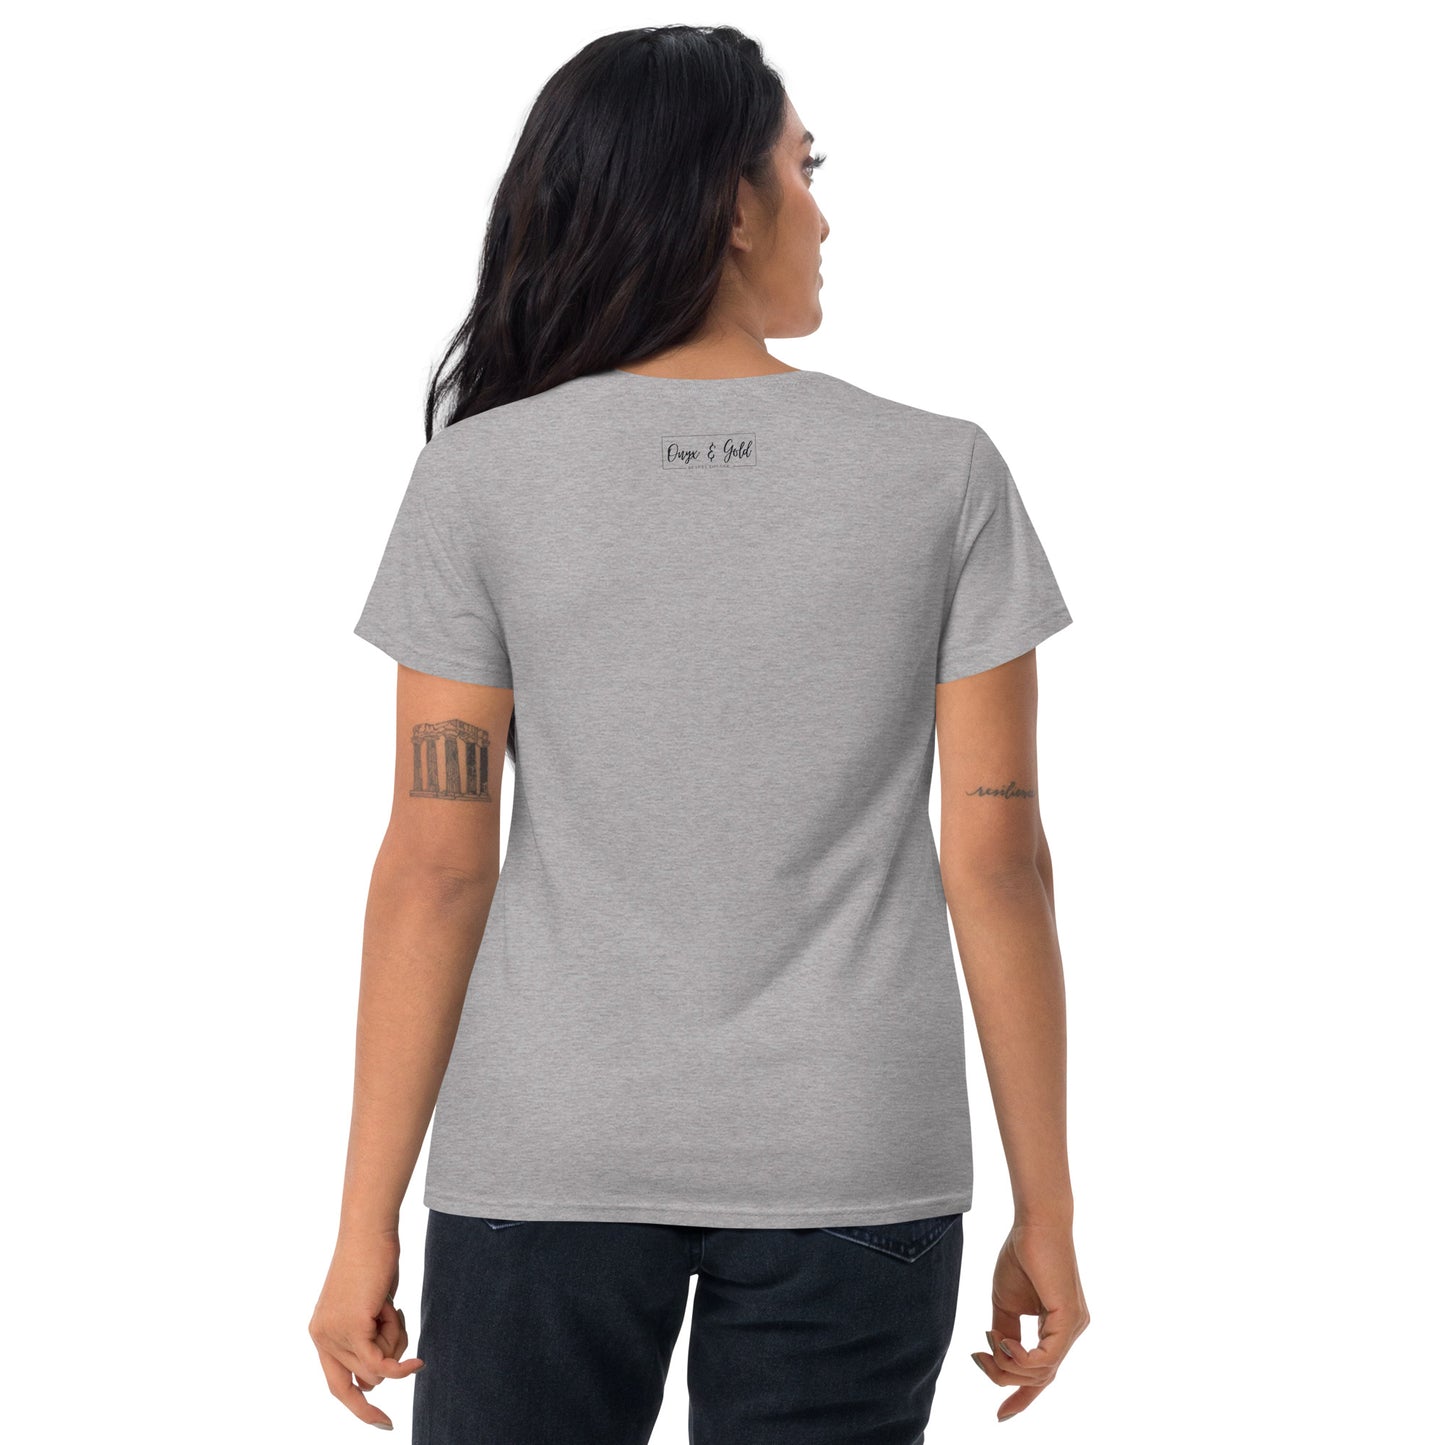 Onyx & Gold -Women's Fashion Fit T-Shirt | Gildan 880 - OG Black Logo with logo on back